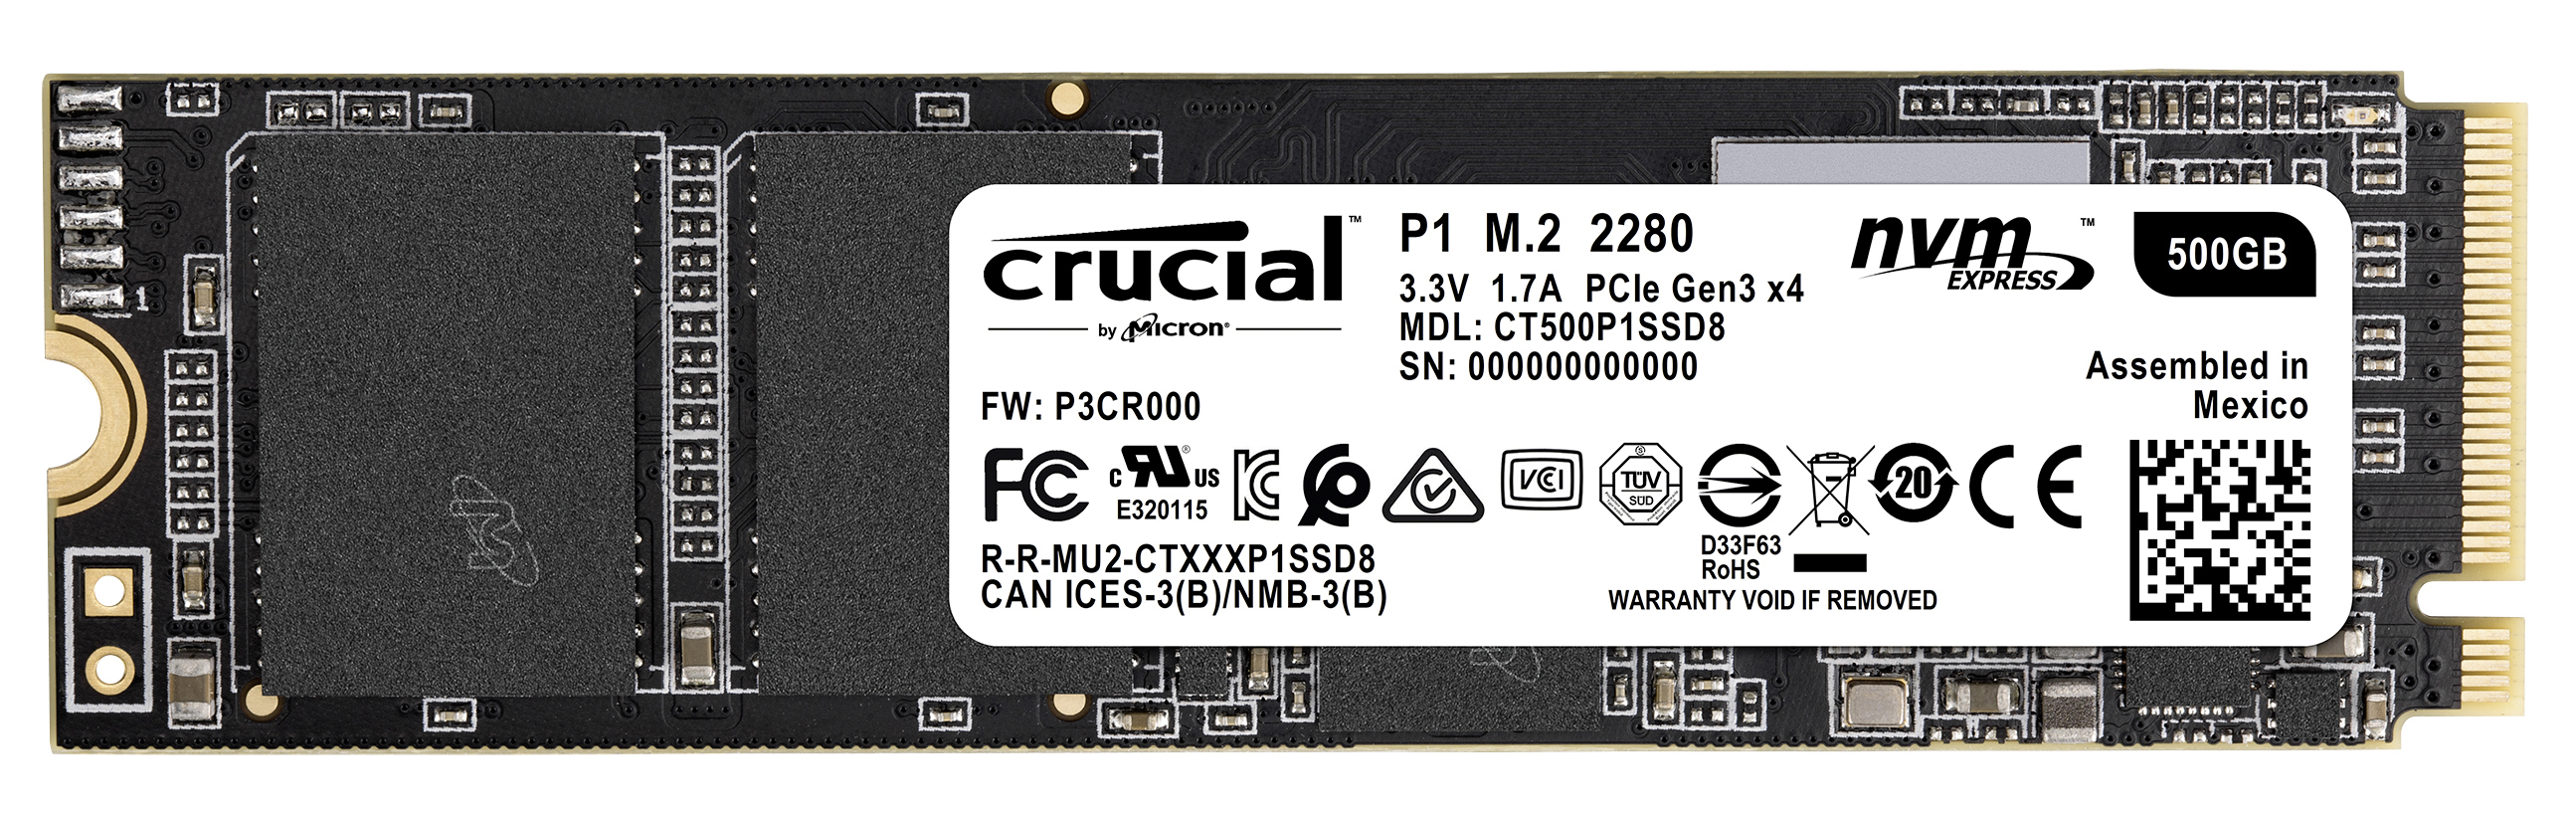 via 500 CRUCIAL M.2 CT500P1SSD8 PCIe, intern Festplatte, SSD GB